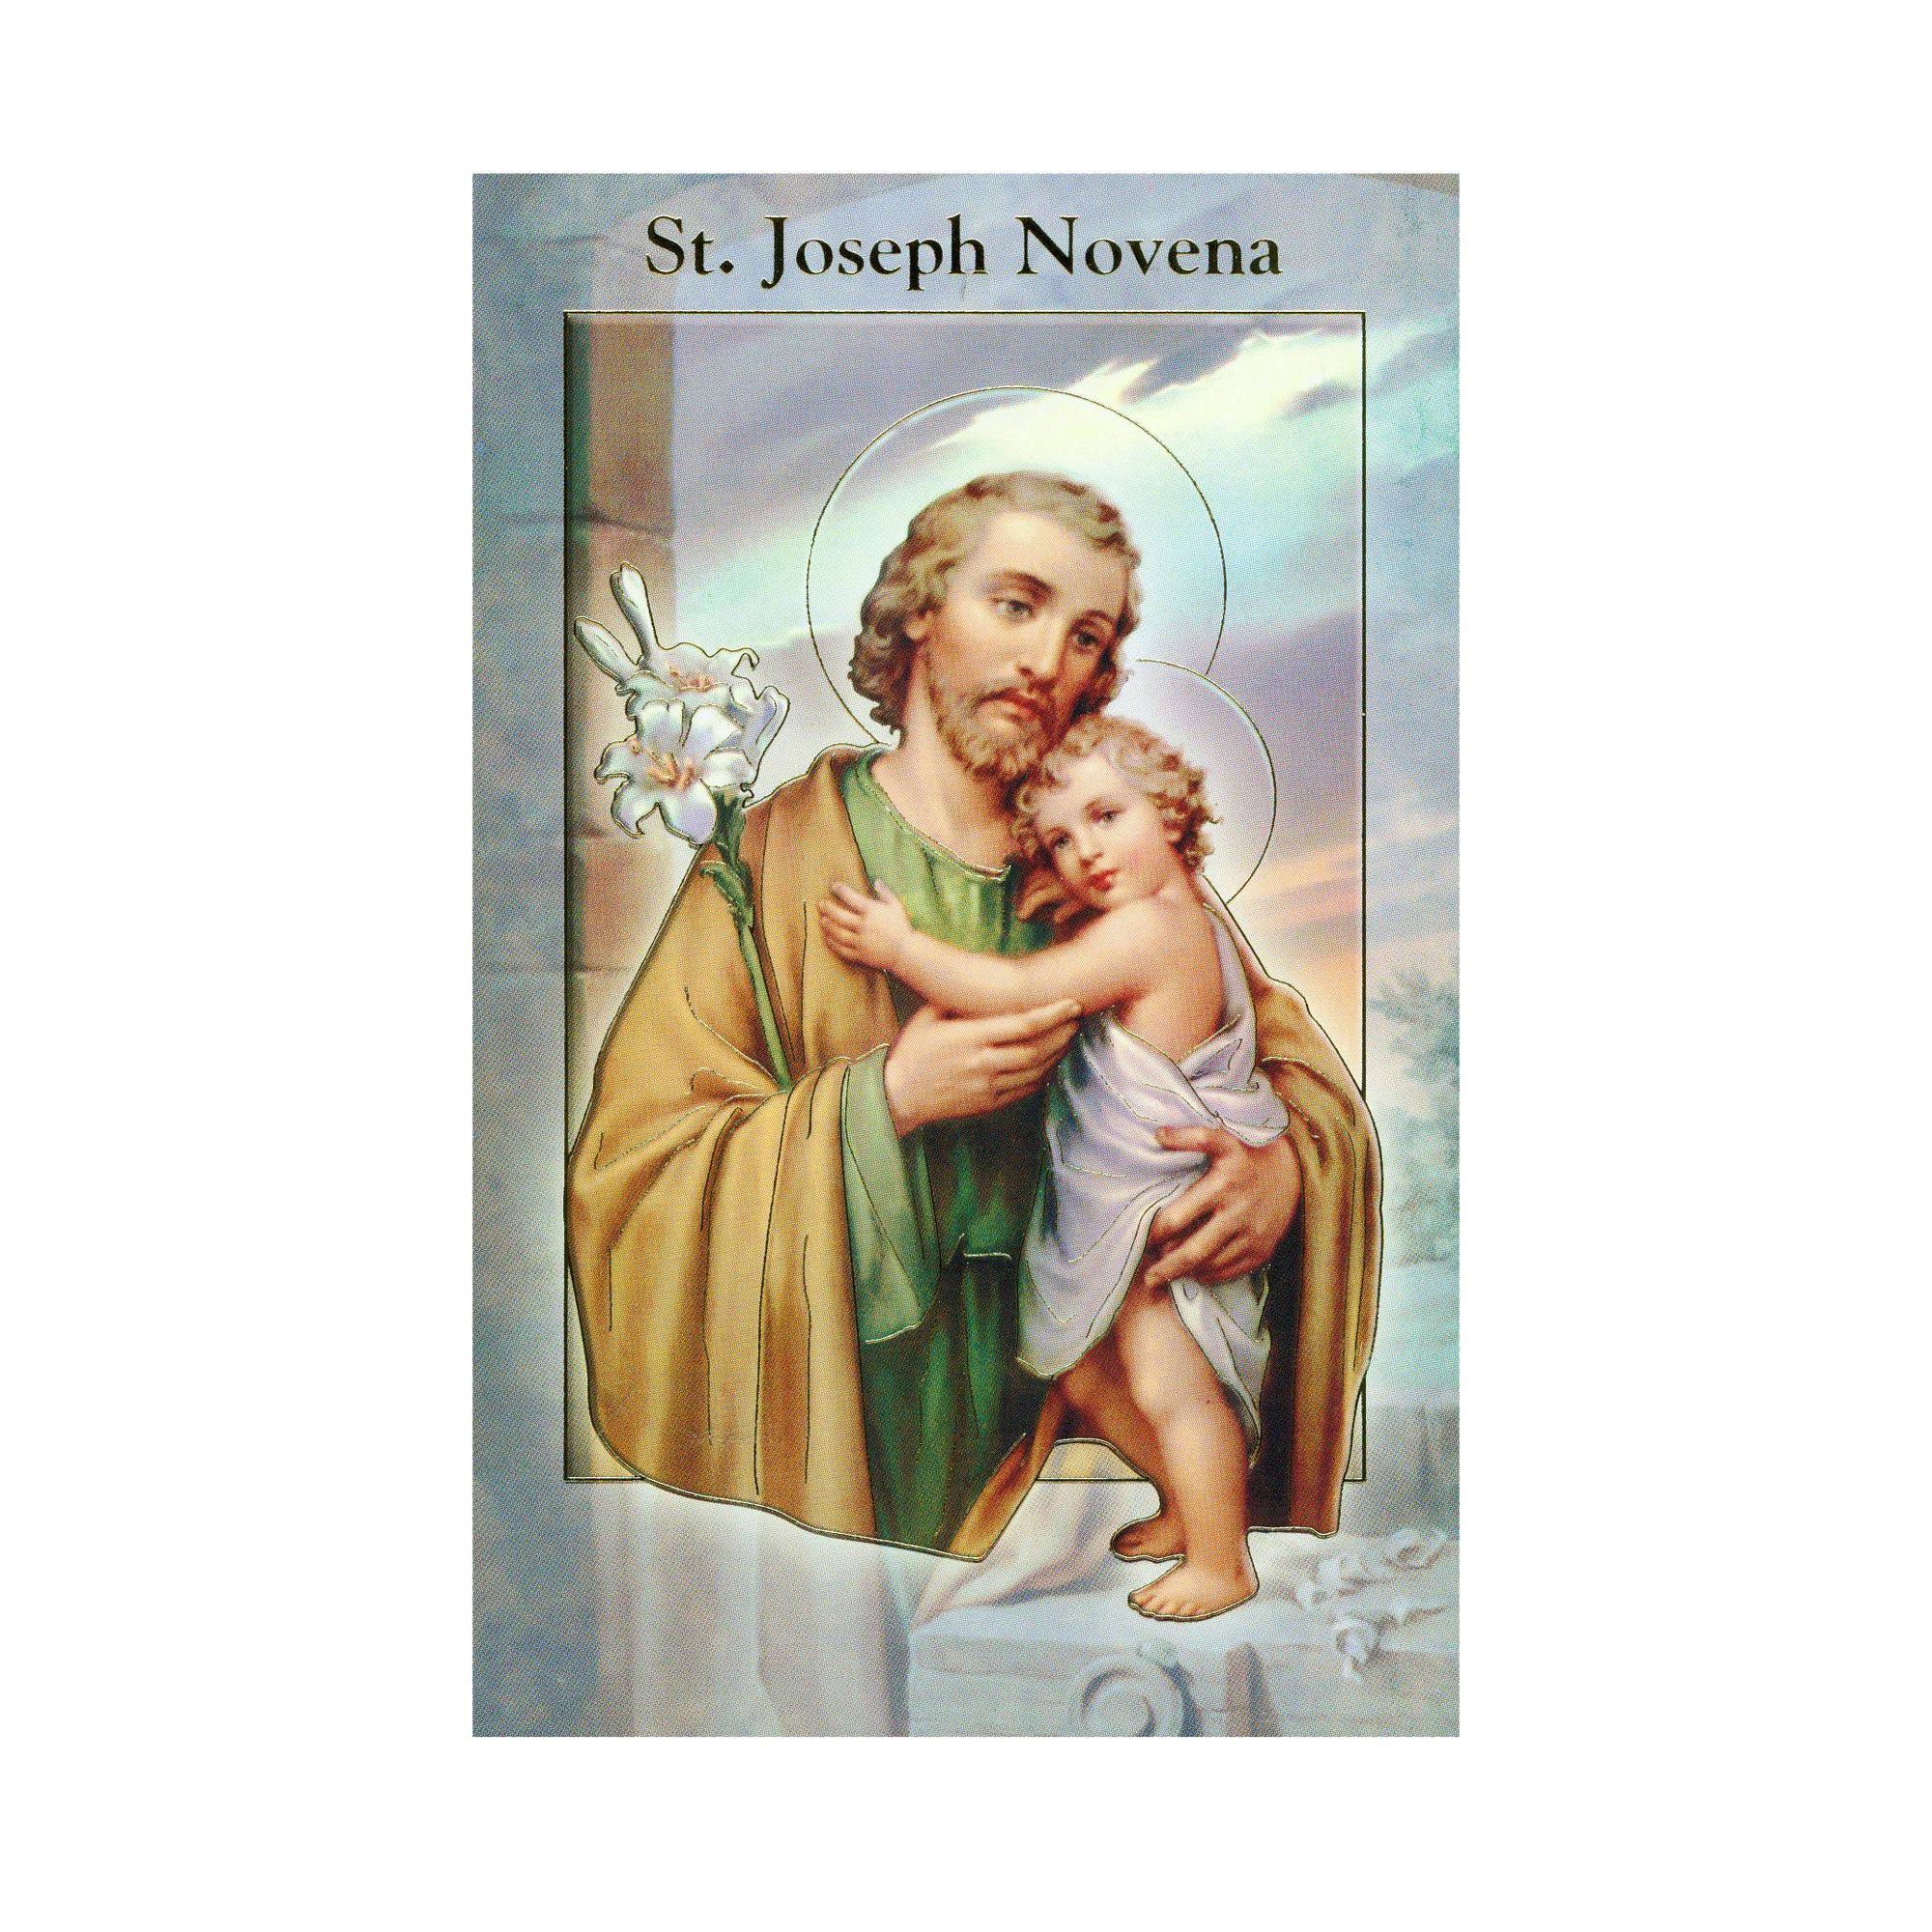 St. Joseph Novena and Prayers - S.J. Daniel A. Lord